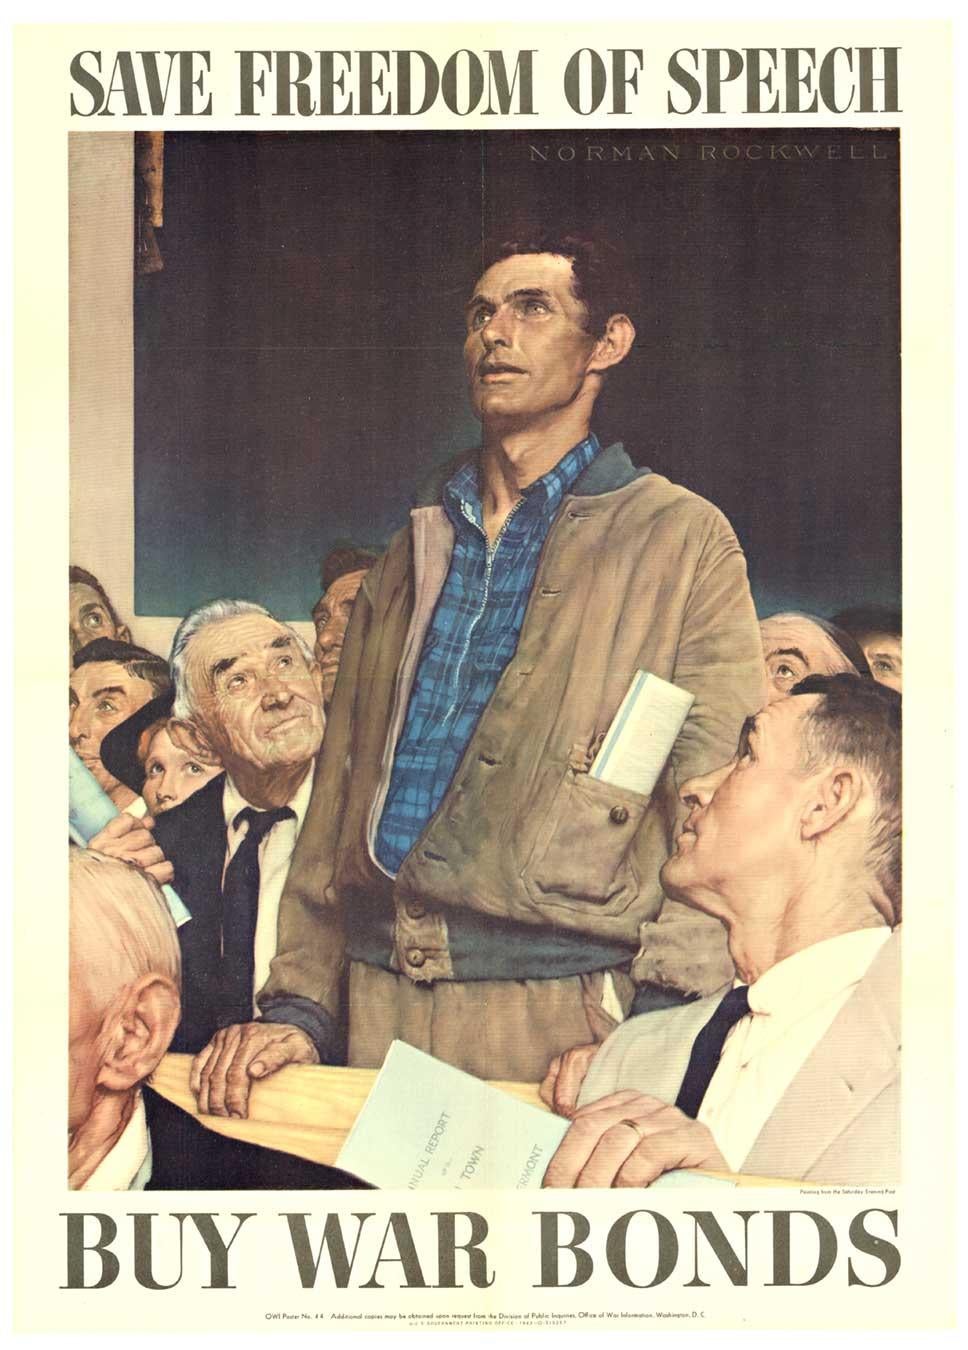 Norman Rockwell Figurative Print - Original Save Freedom of Speech  Buy War Bonds vintage poster